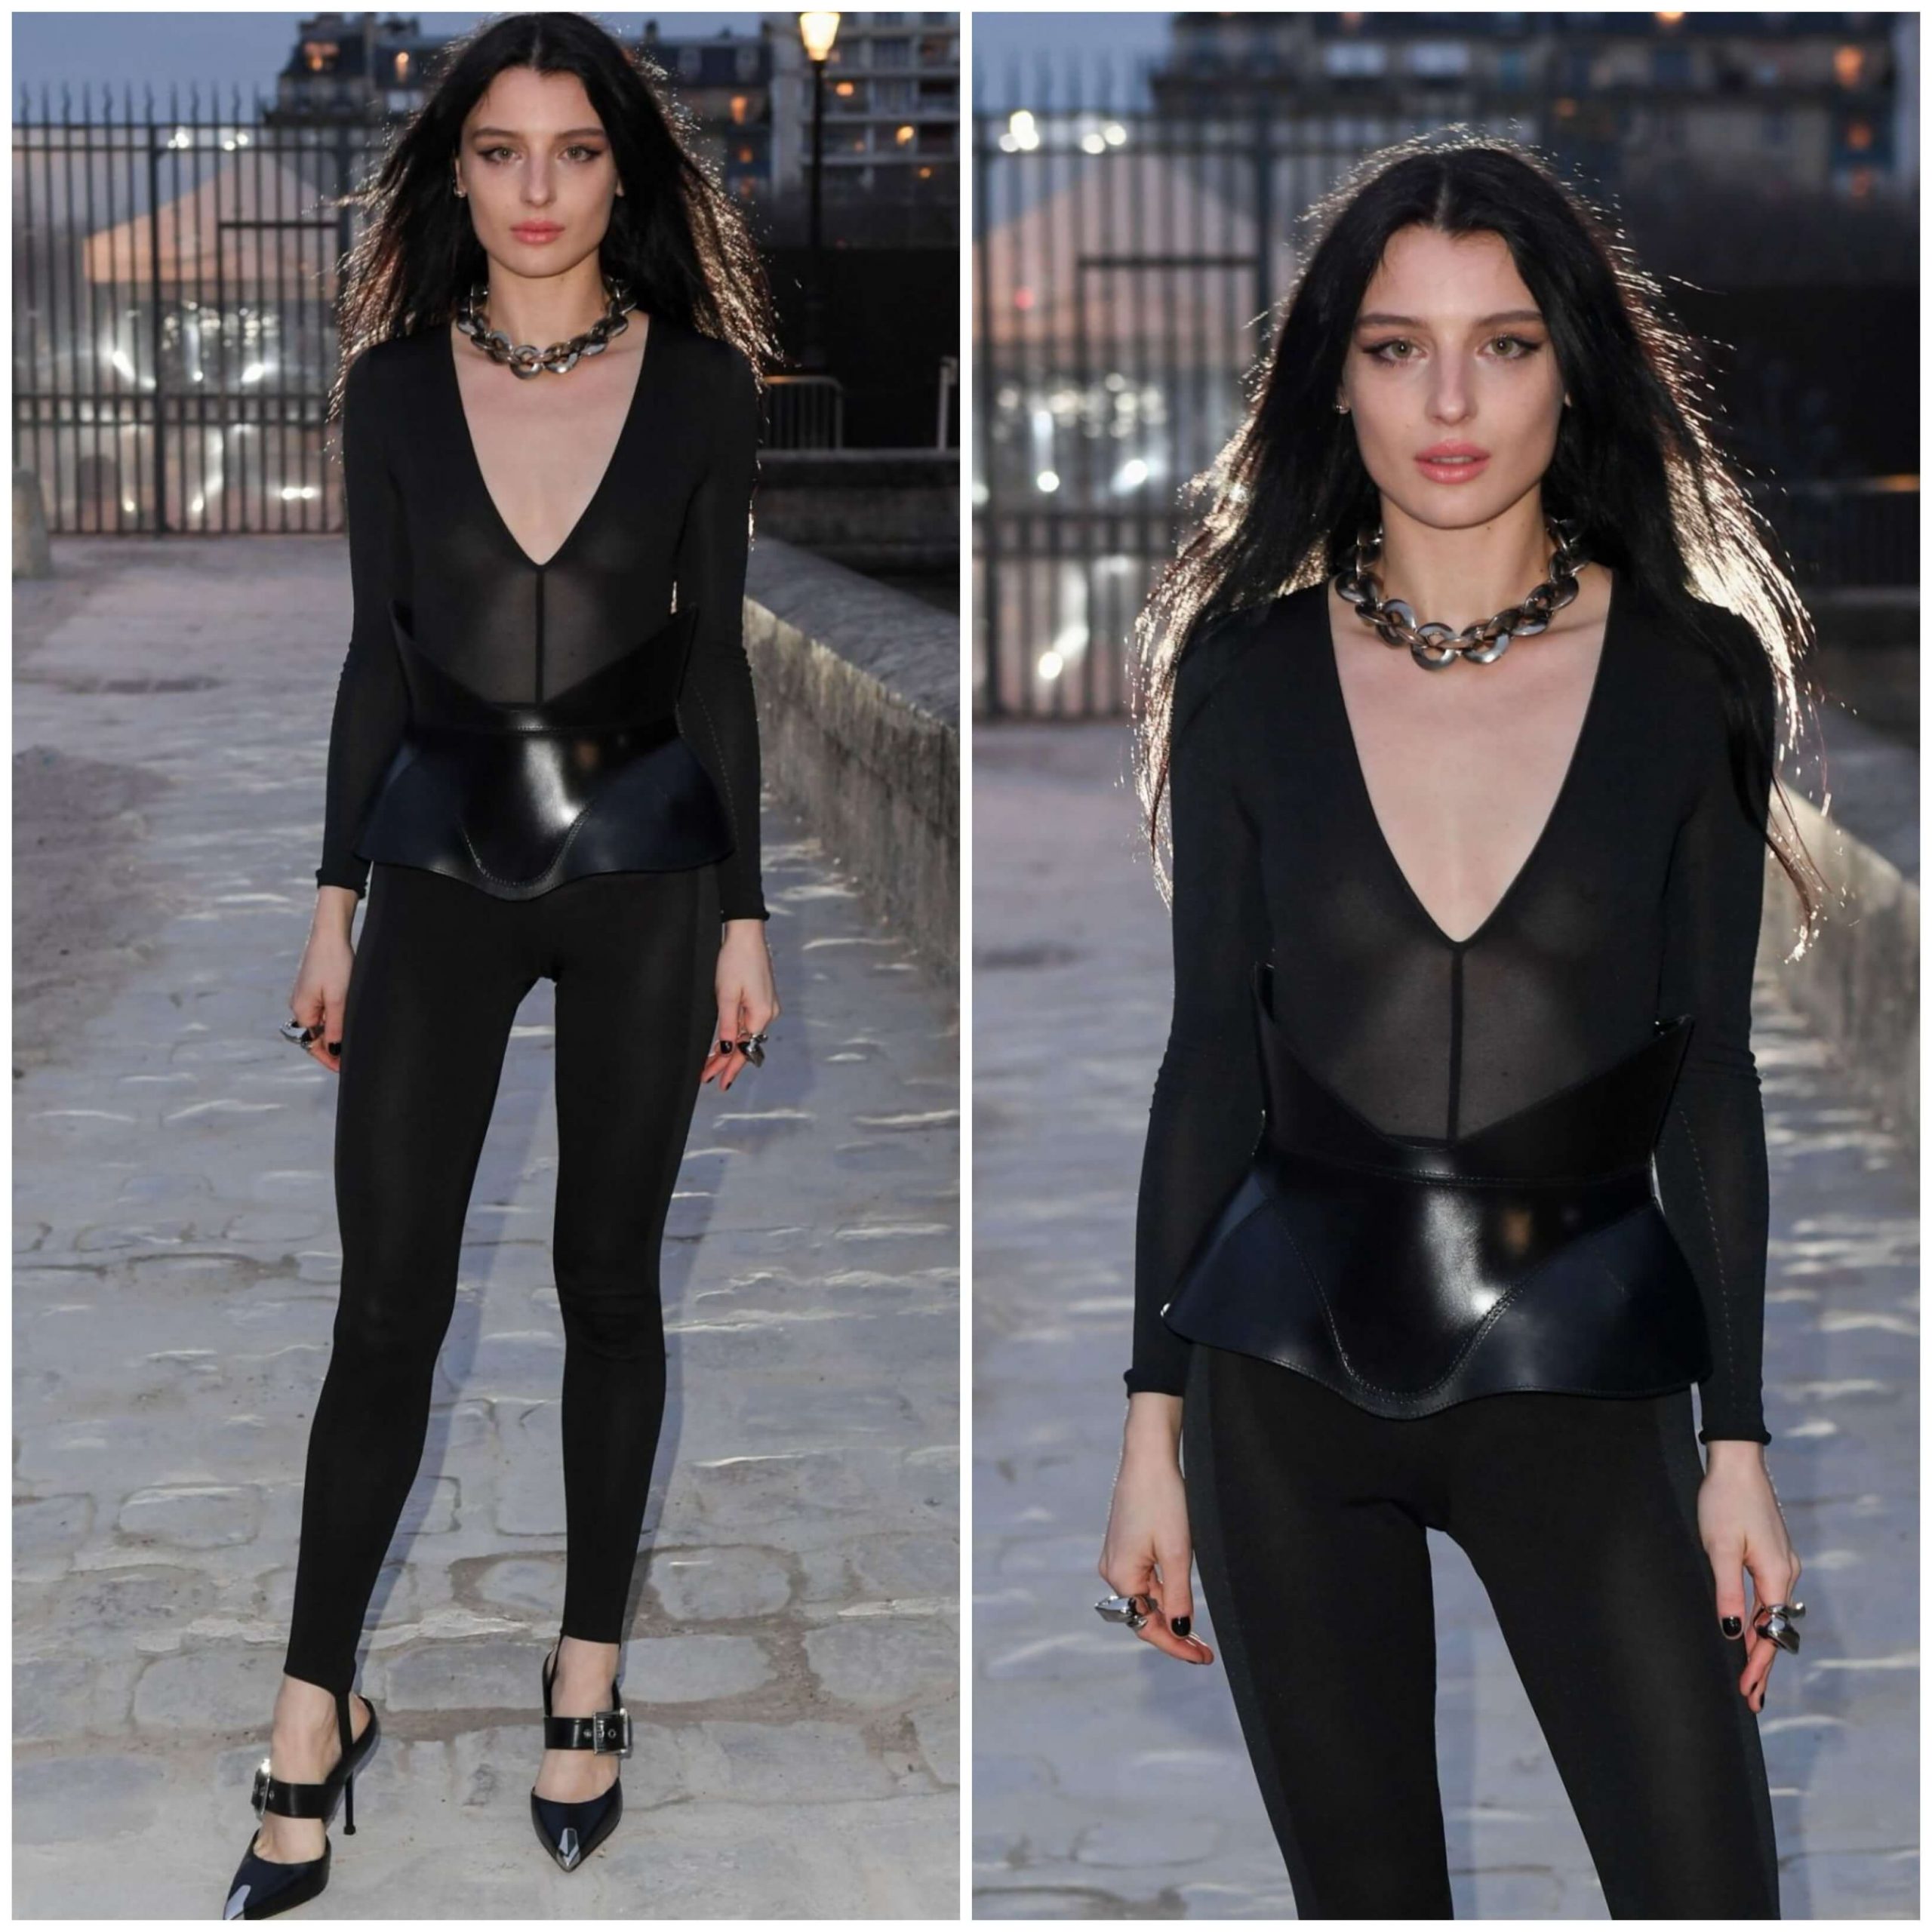 Alice Pagani In Full Black Dress At Alexander McQueen Show at Paris Fashion Week